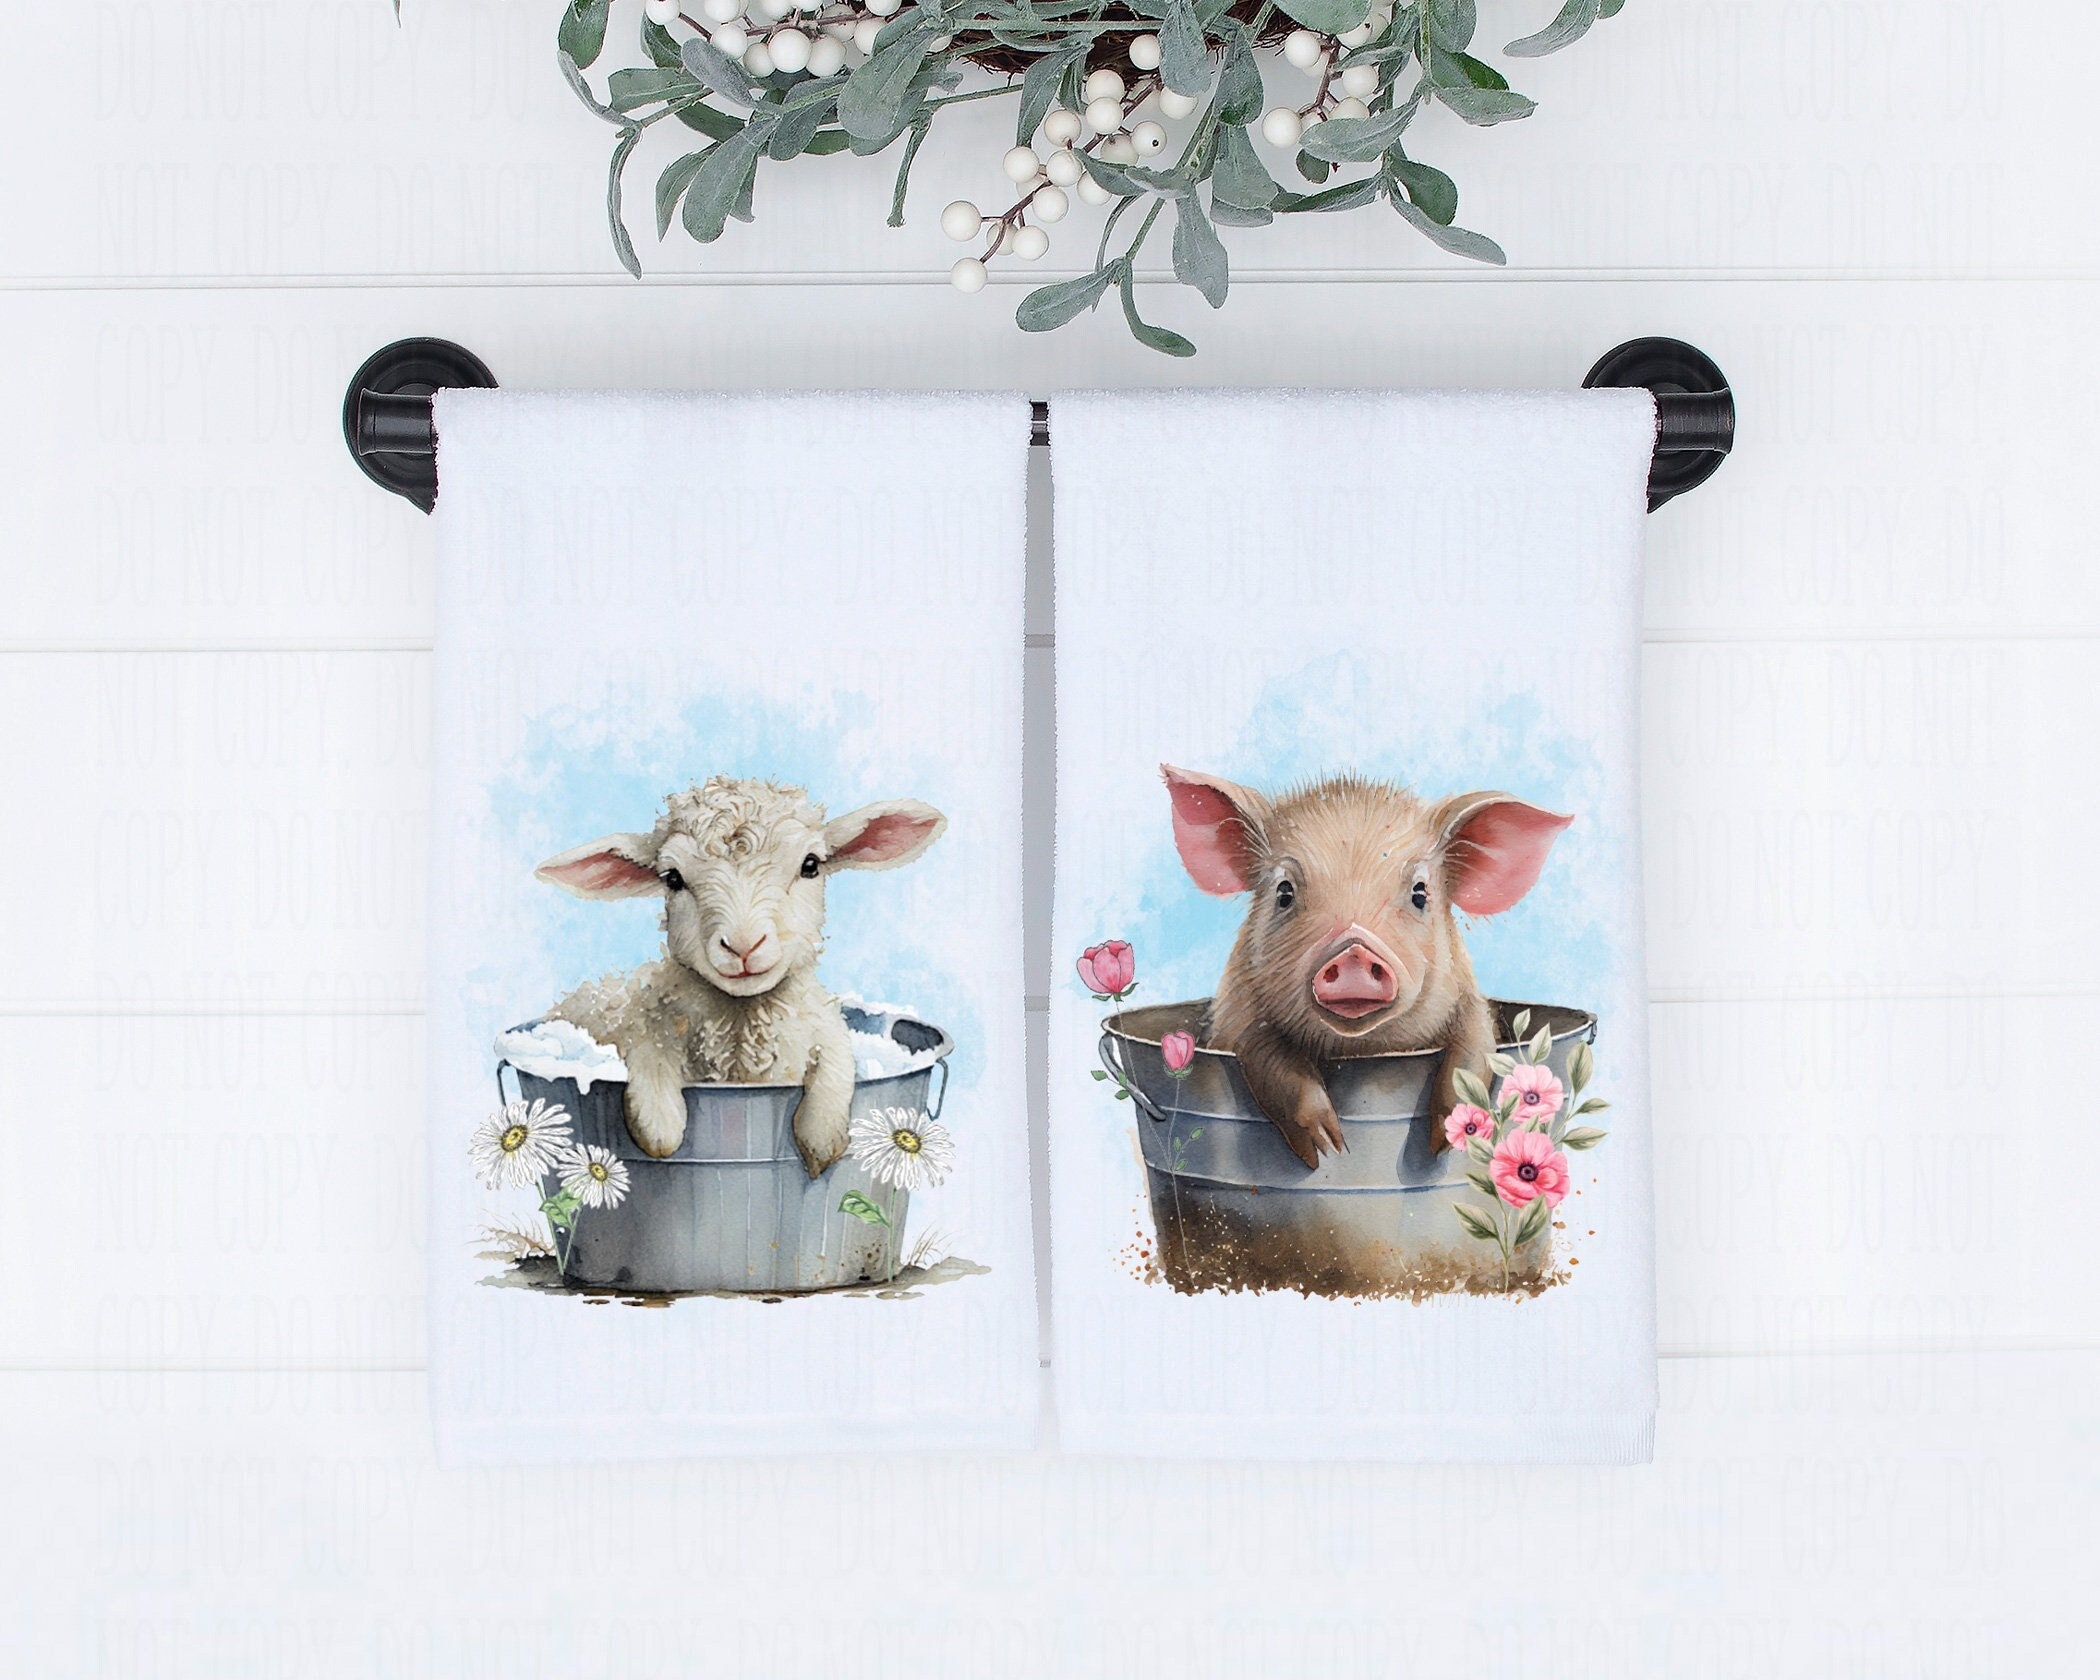 Farmhouse Kitchen Towels Set of 5 Farm Animals Rooster Pig Cow Dish Towels  Black Tan Flour Sack 16”X28” 100% Cotton